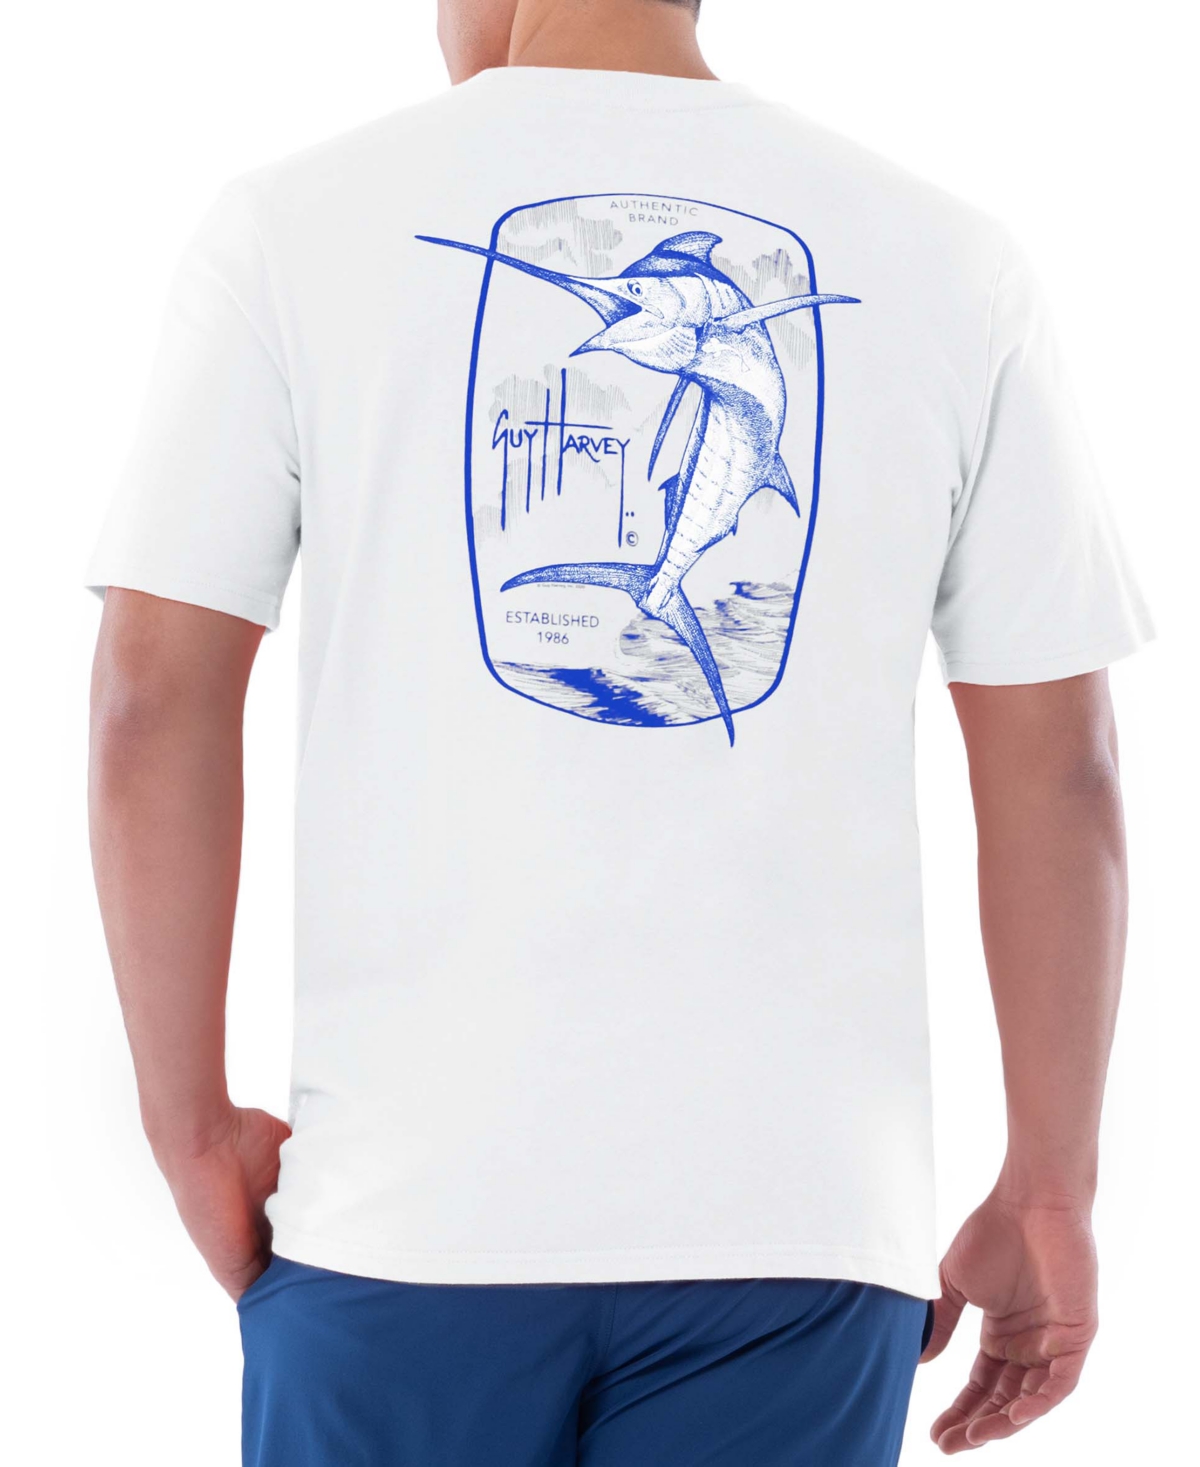 Guy Harvey Men's Short-Sleeve Graphic T-Shirt